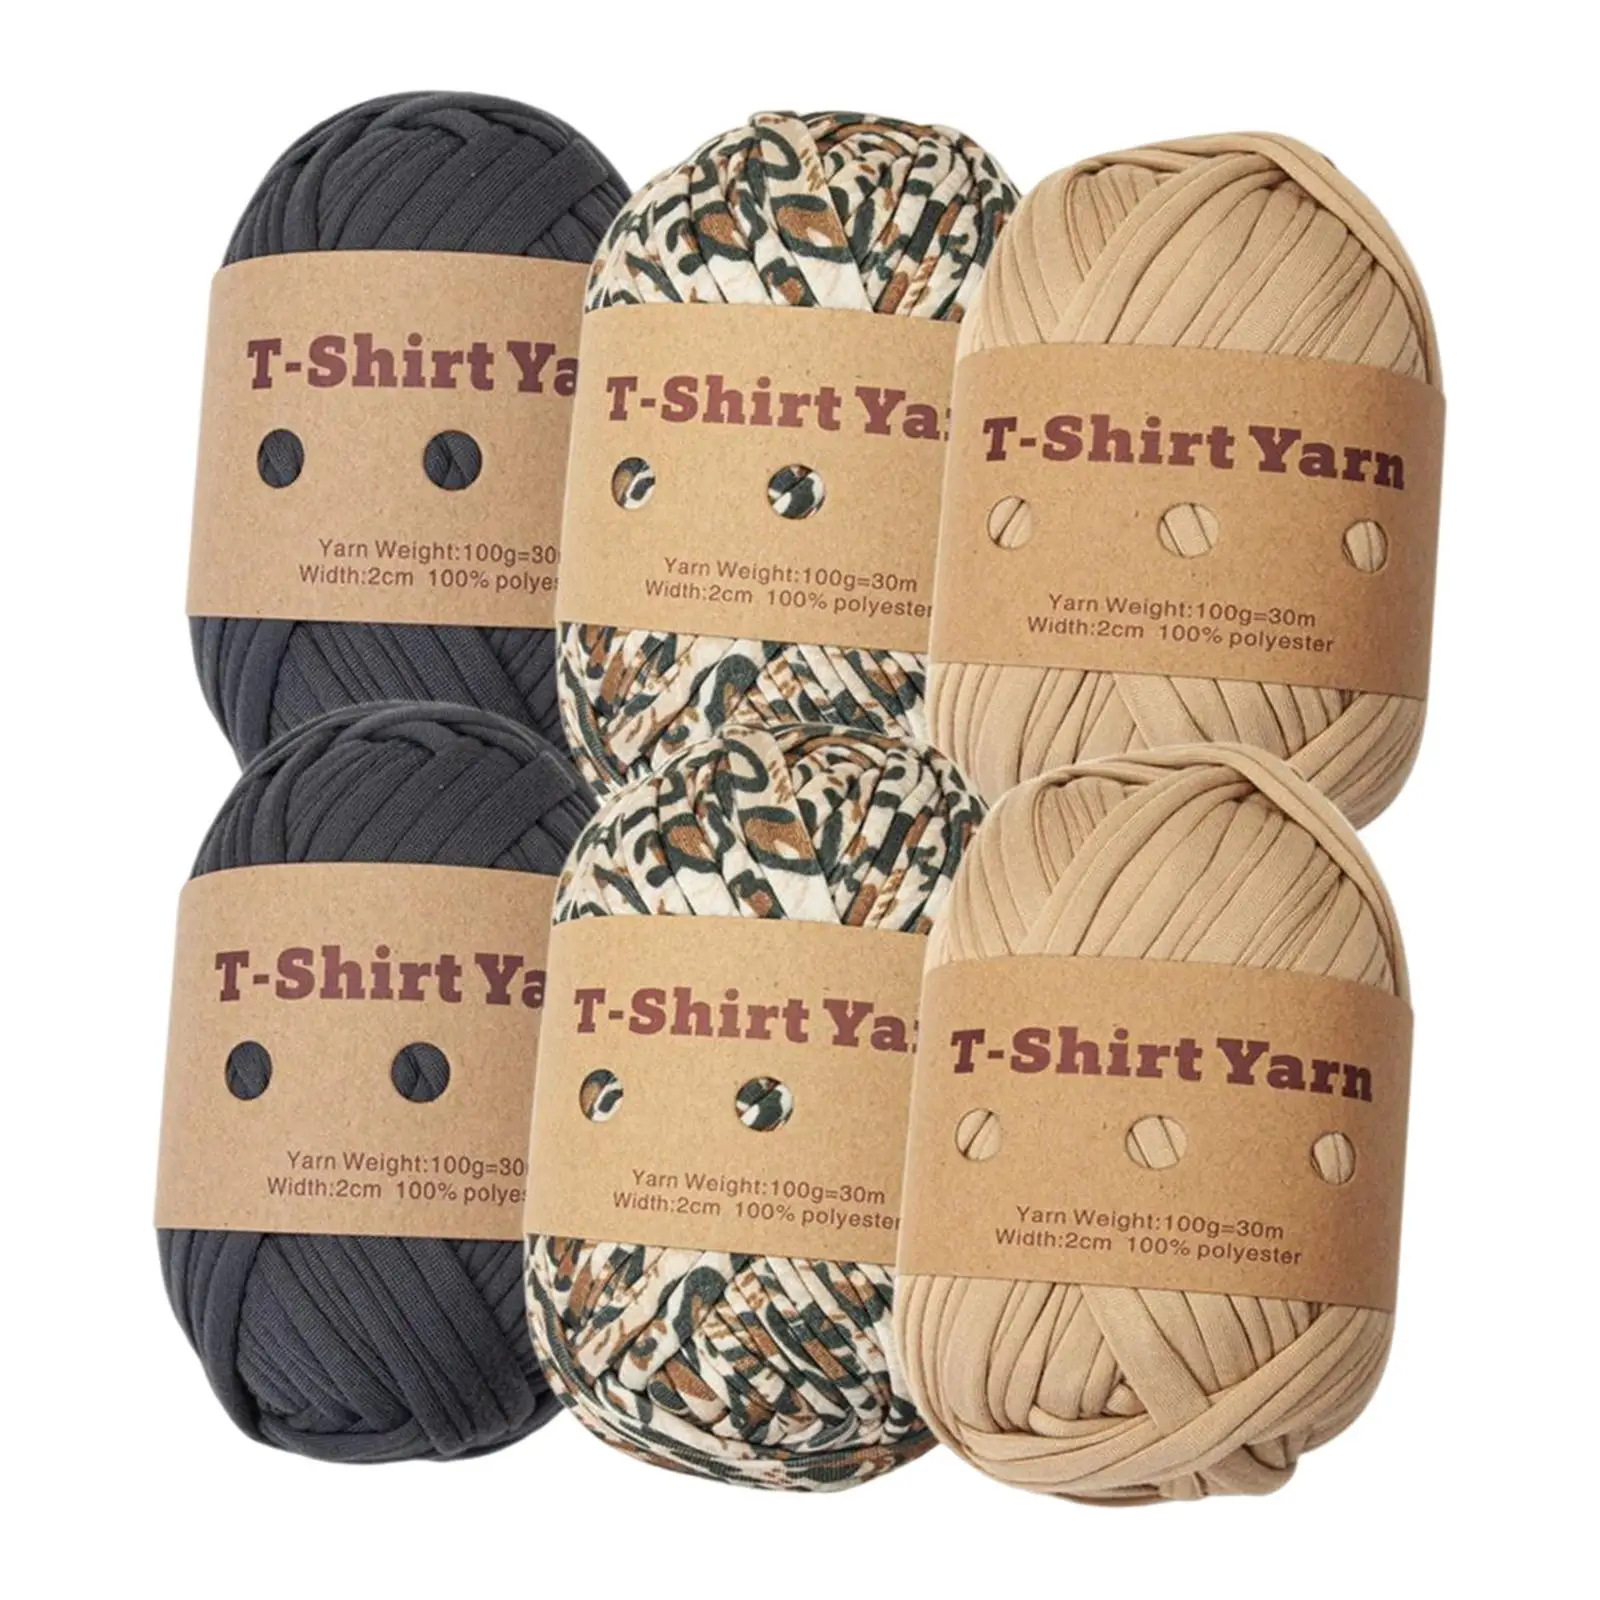 6x T-shirt Yarn Knitting Yarn Set Spaghetti Yarn Fabric Cloth Yarn for Rugs Throw Blanket Pet Bed Home Decor Handbag